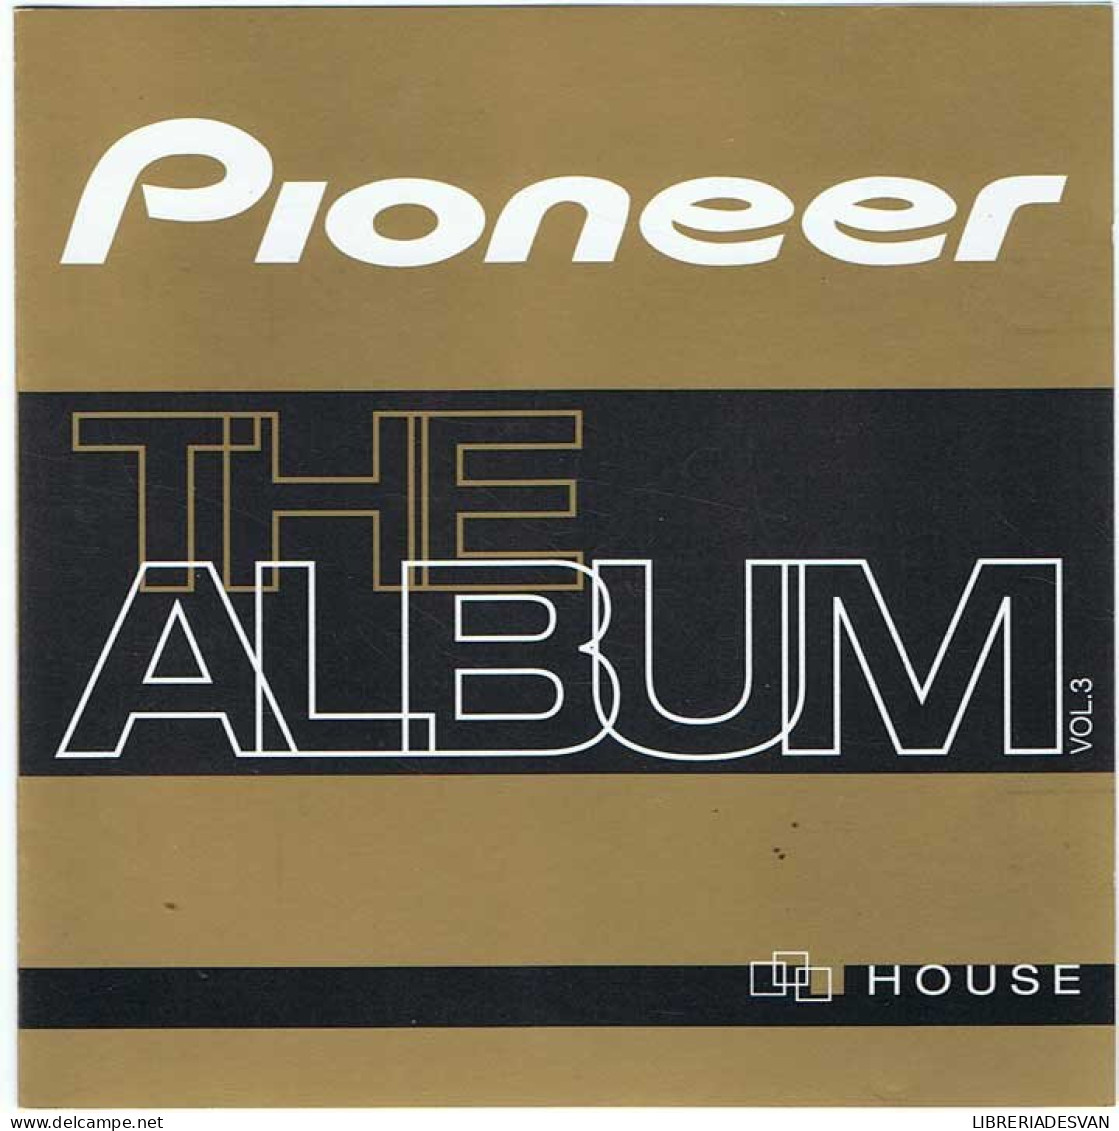 Pioneer The Album Vol. 3 House. CD - Dance, Techno & House